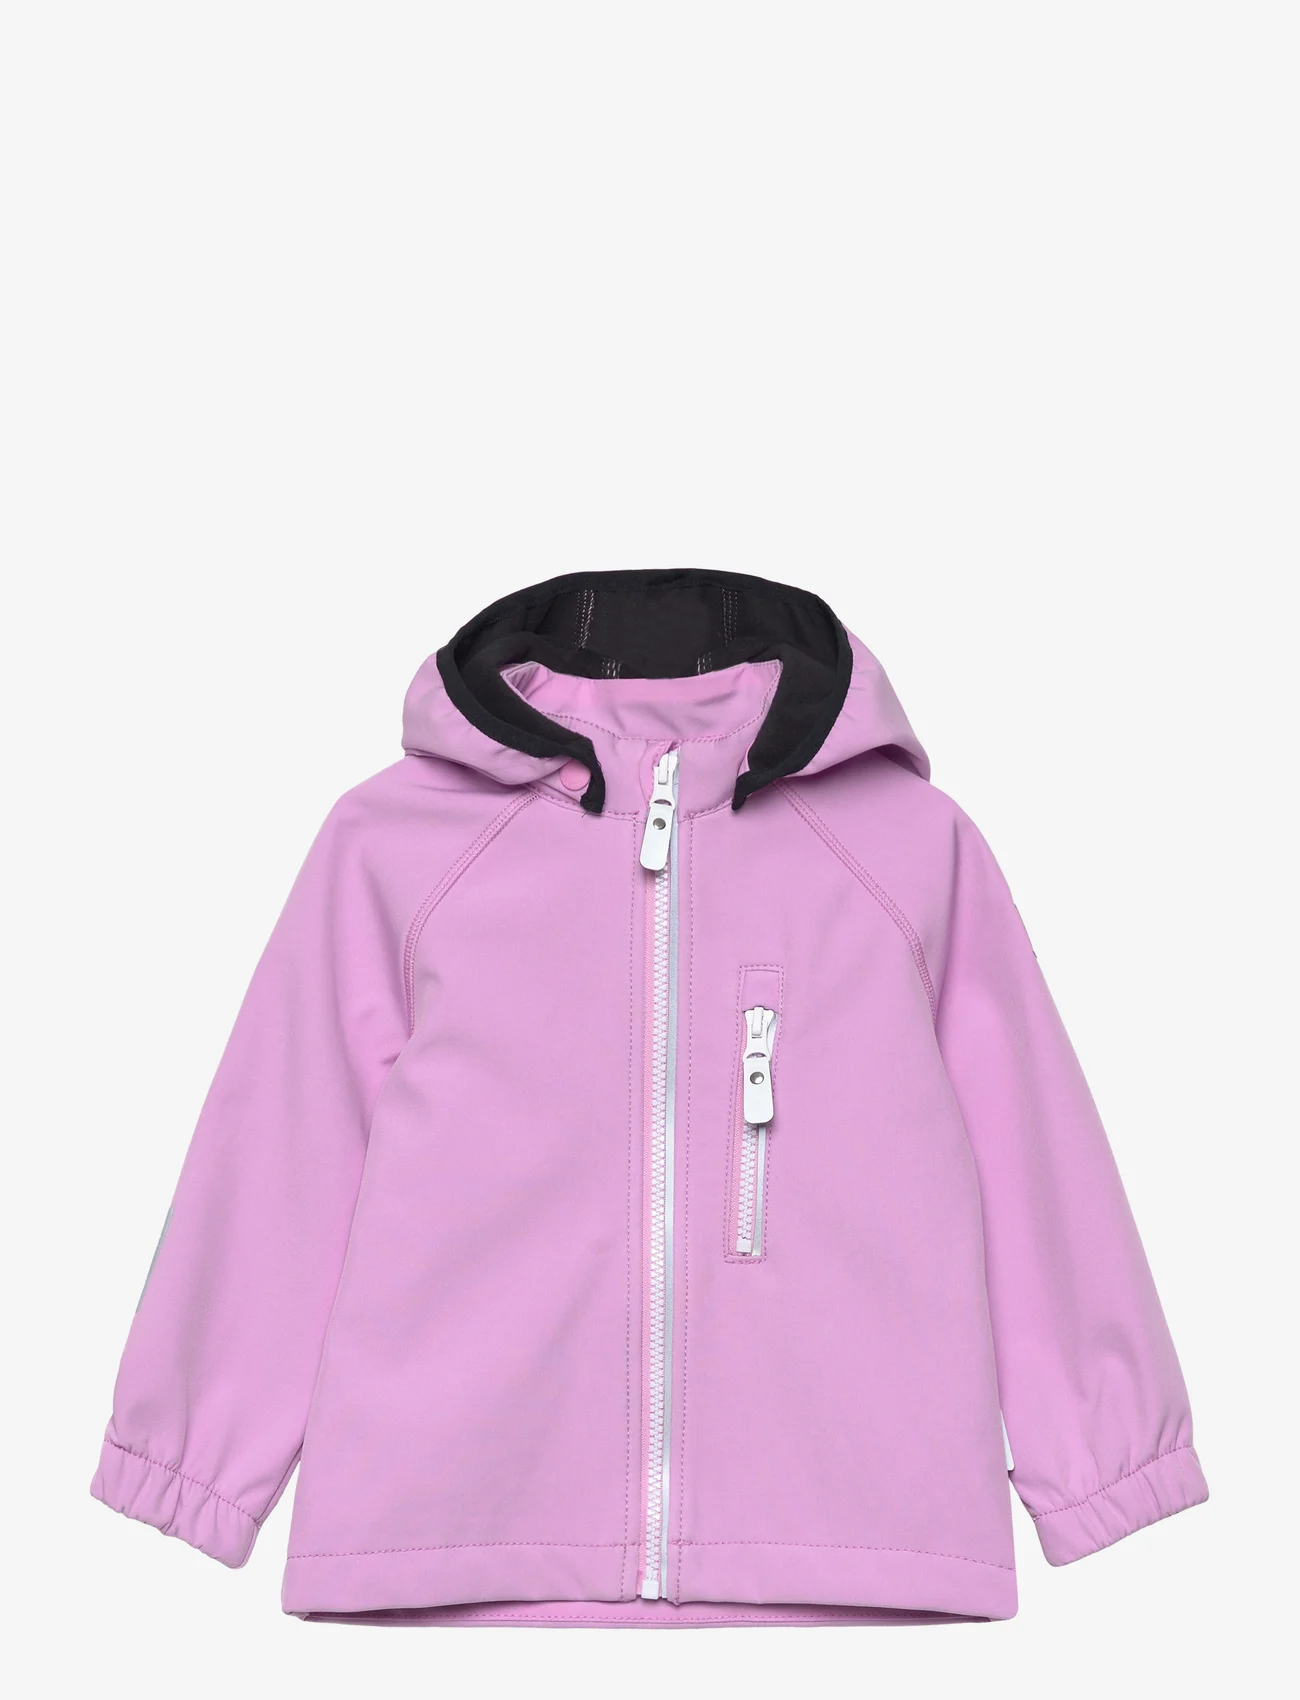 Reima - Softshell jacket, Vantti - kinder - lilac pink - 0